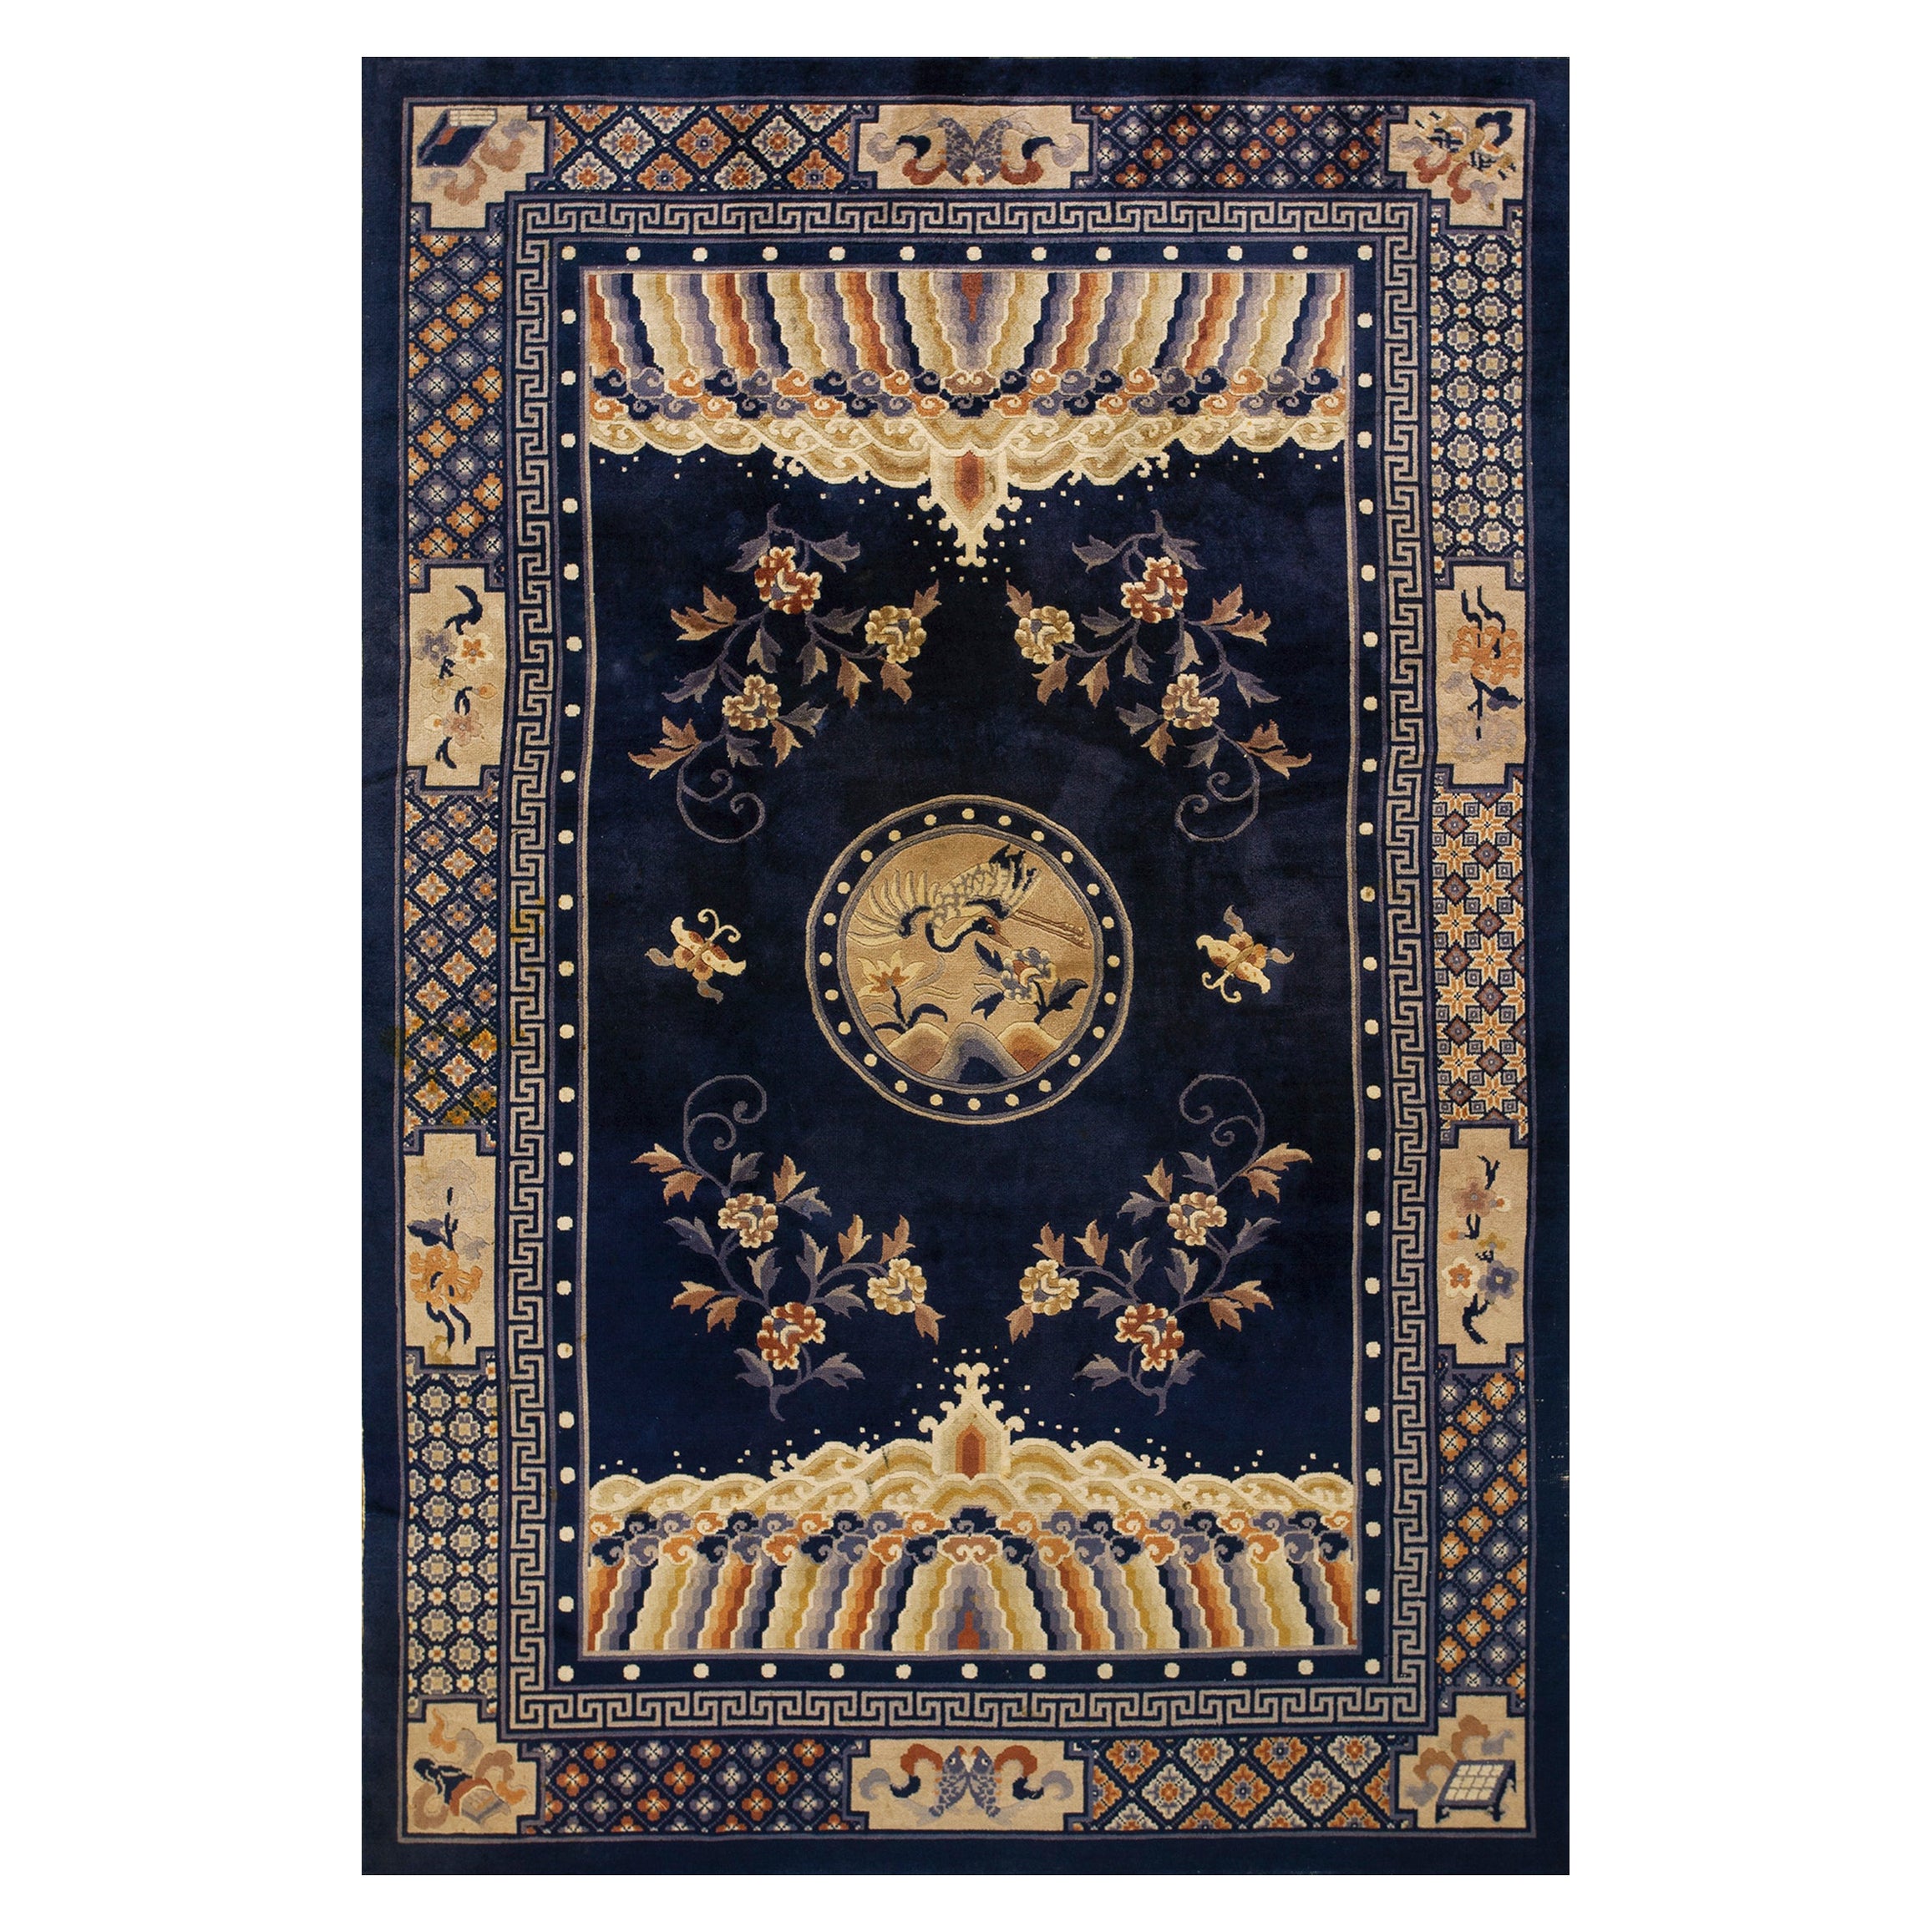 1920s Chinese Peking Carpet ( 6' 1'' x 9' - 185 x 275 cm )